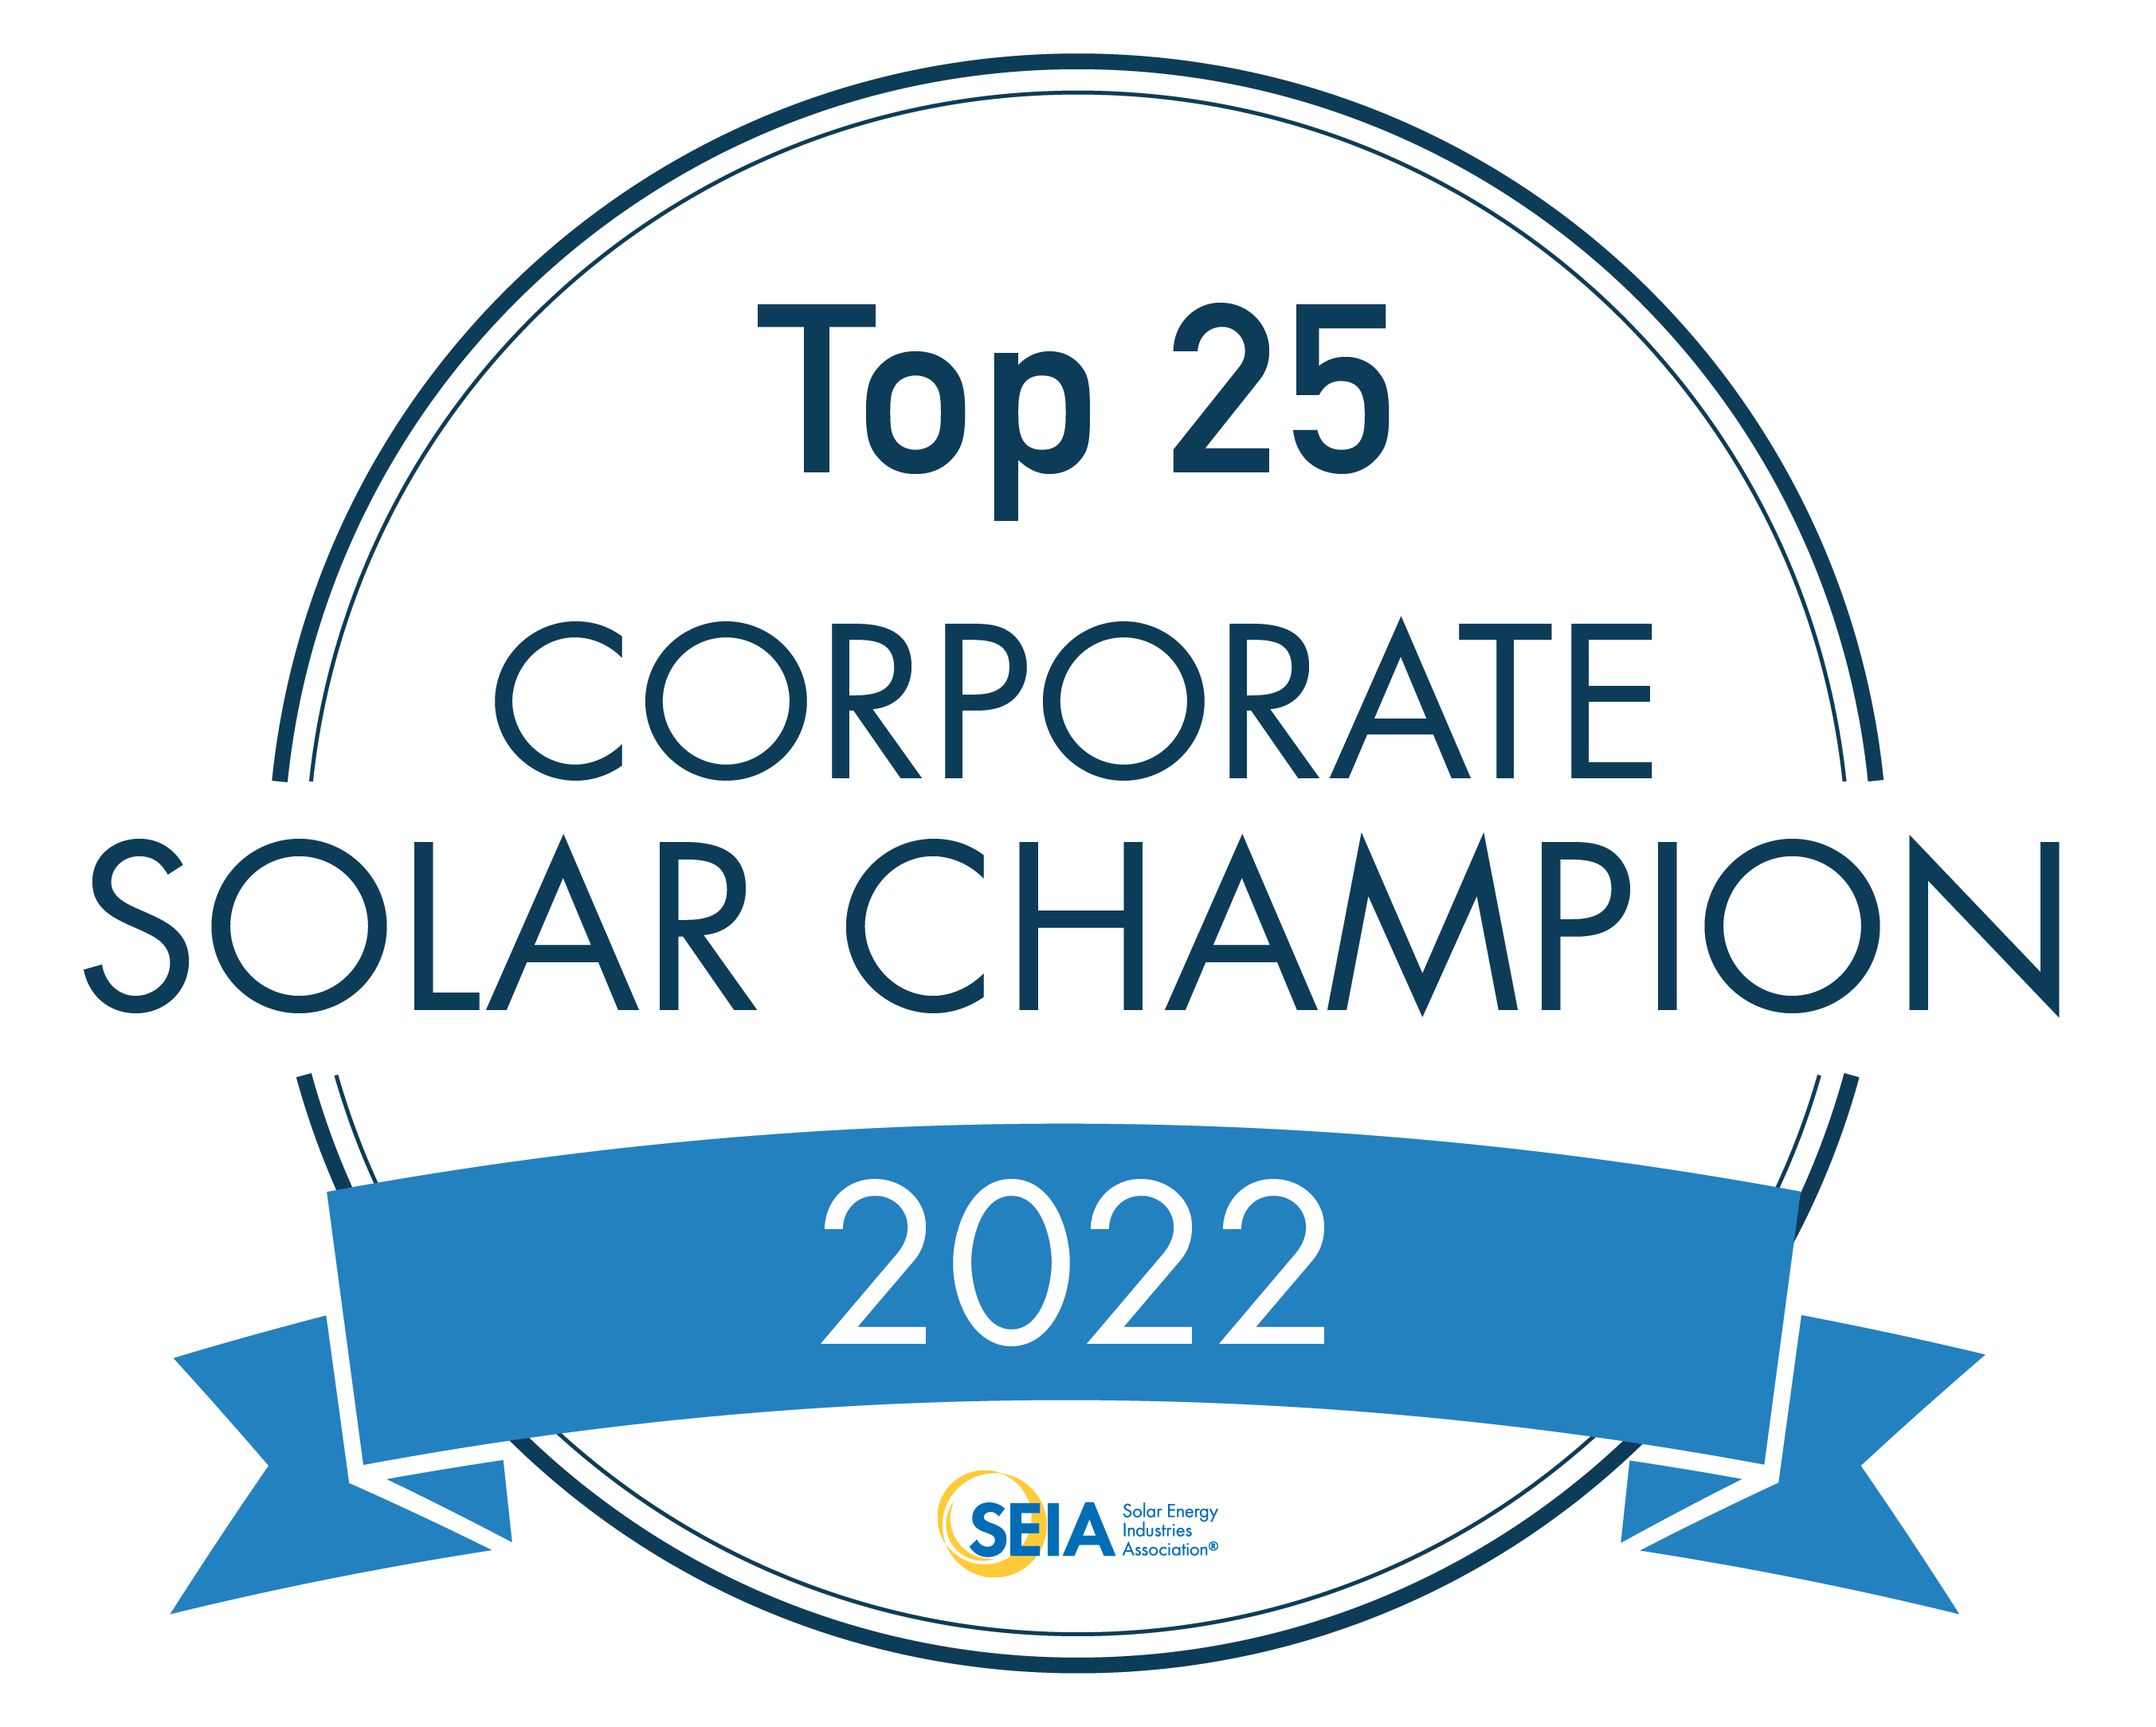 Top 25 Corporate Solar Champion 2022 logo